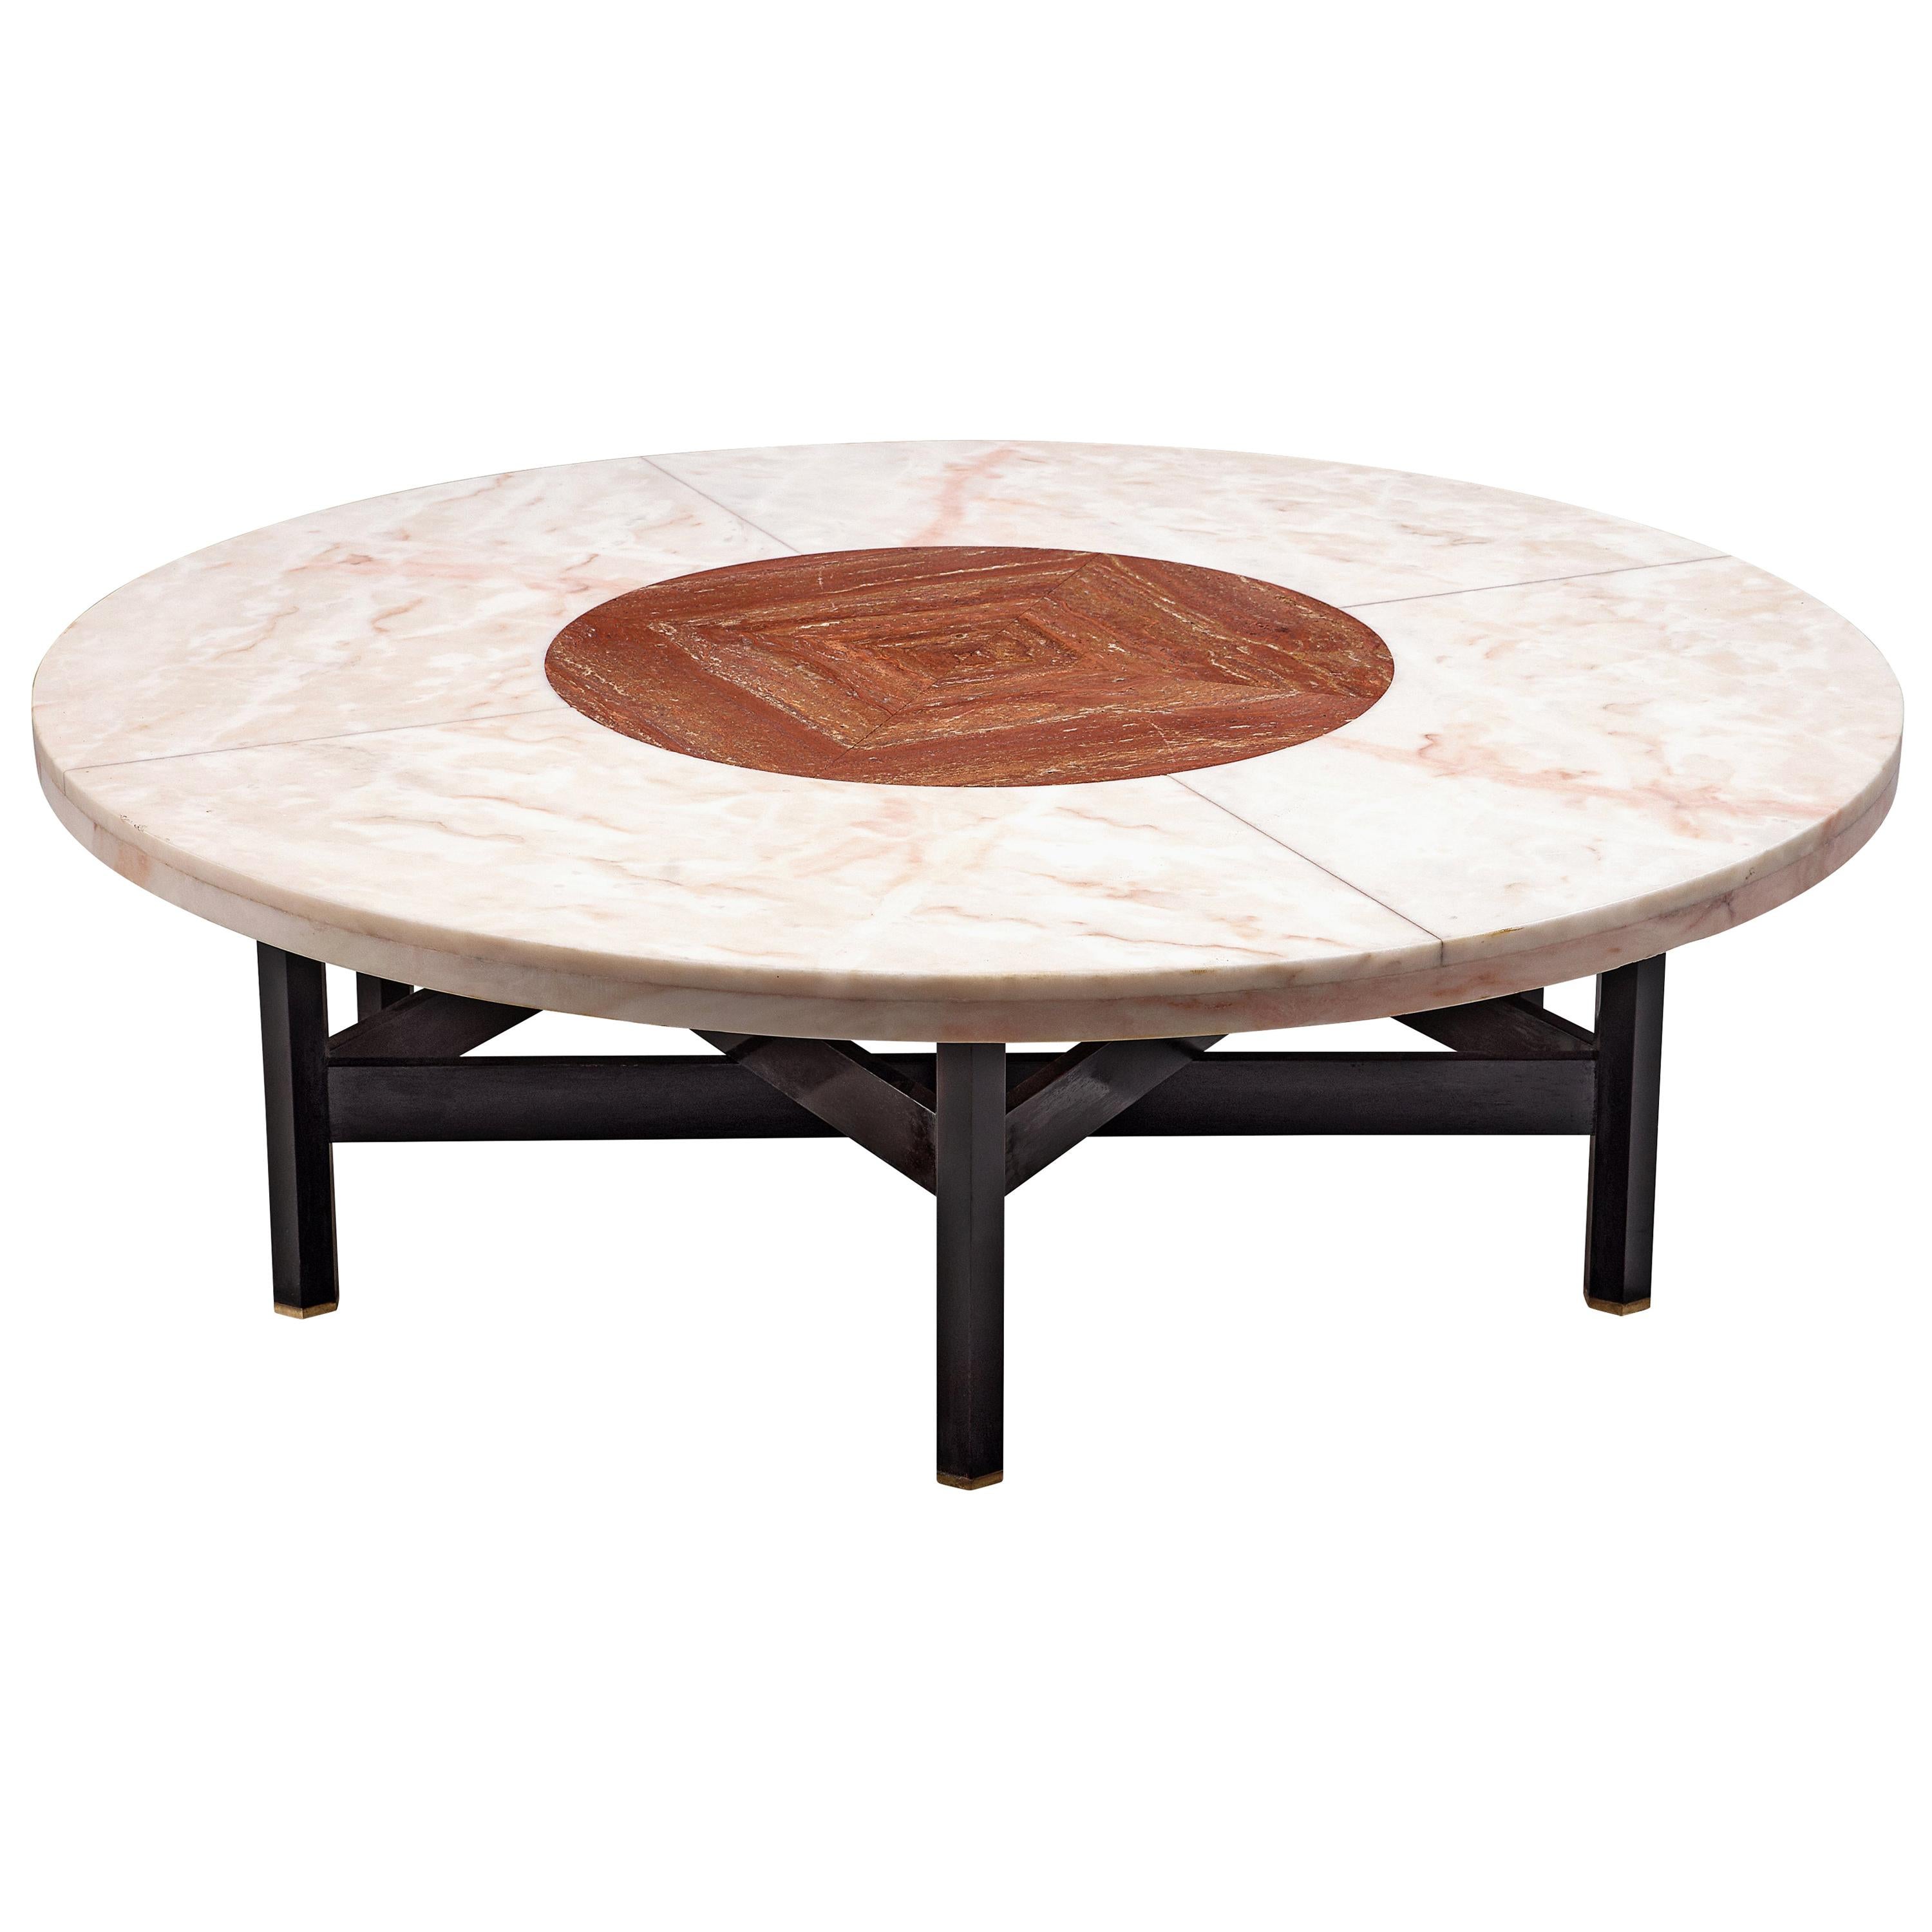 Jan Vlug Large Coffee Table with Round Marble Top